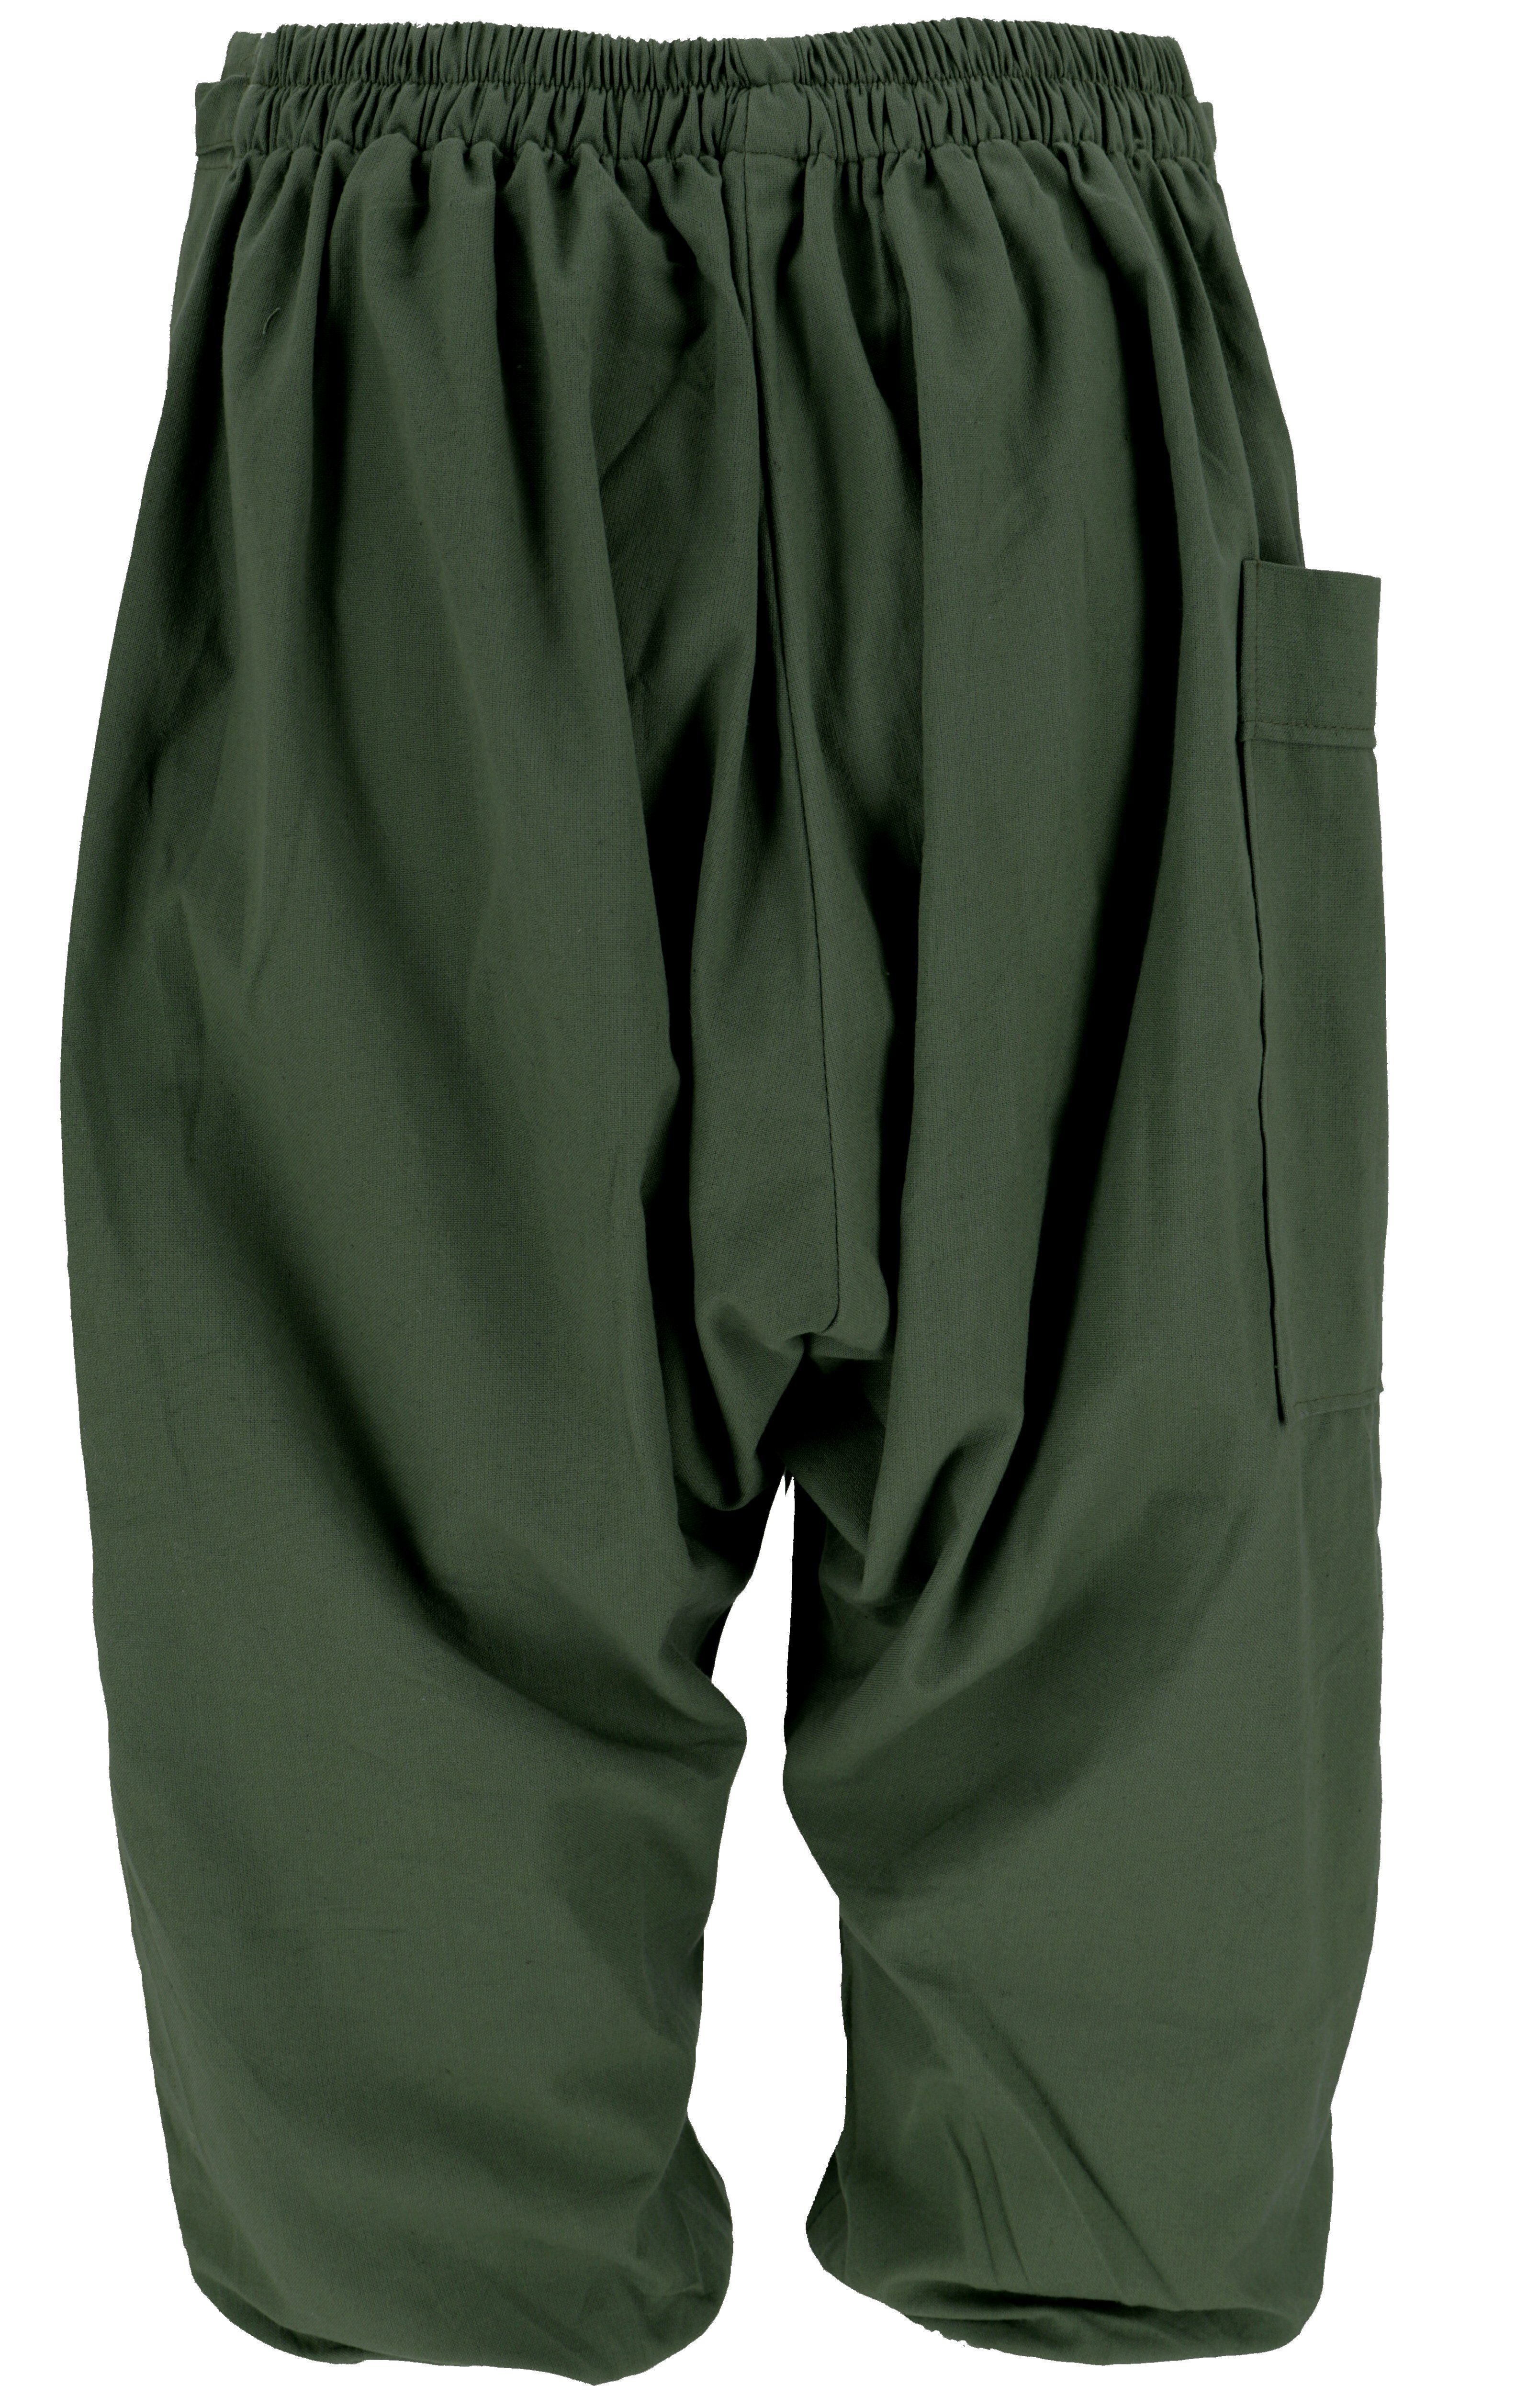 - Relaxhose Baggy Bekleidung khakigrün Ethno Sarouel alternative Hose Style, Guru-Shop Shorts,